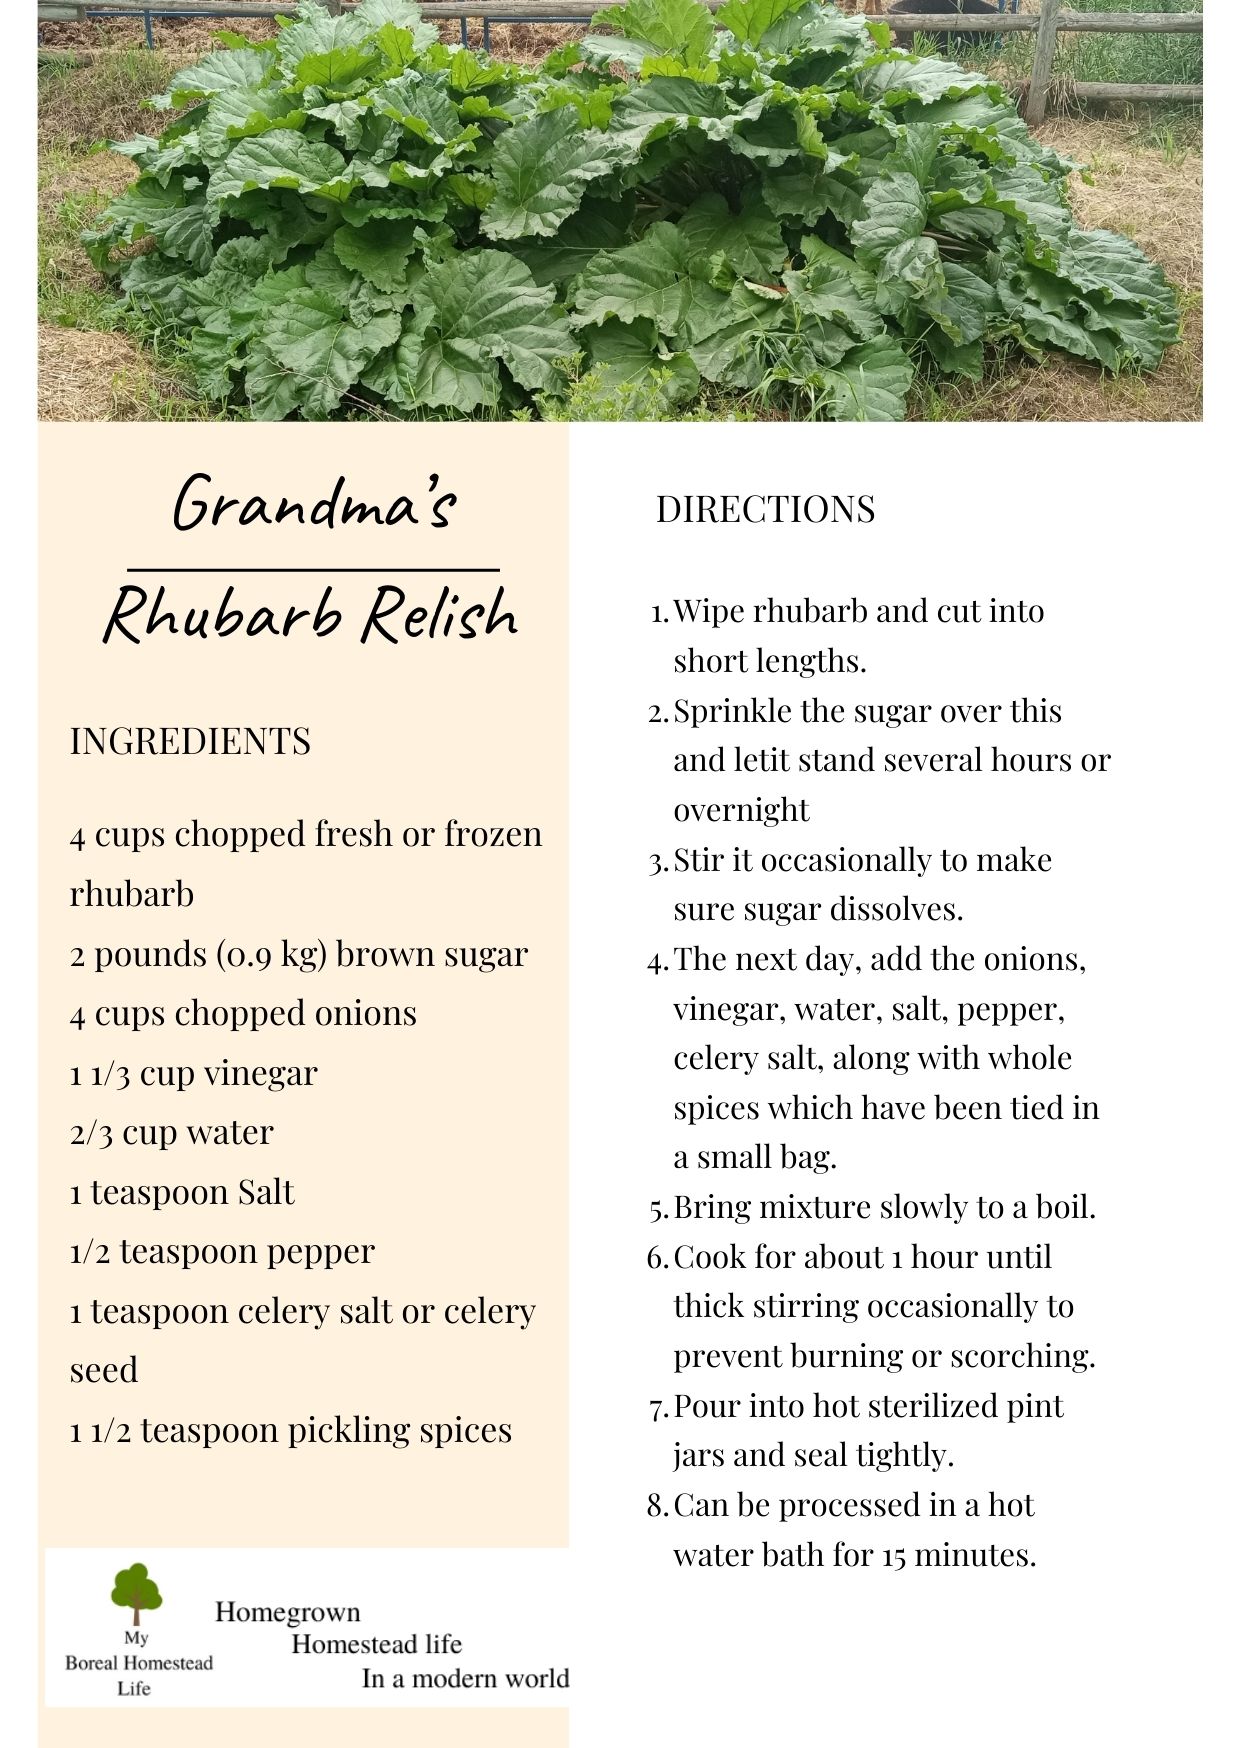 Preserving rhubarb - Grandma's rhubarb relish